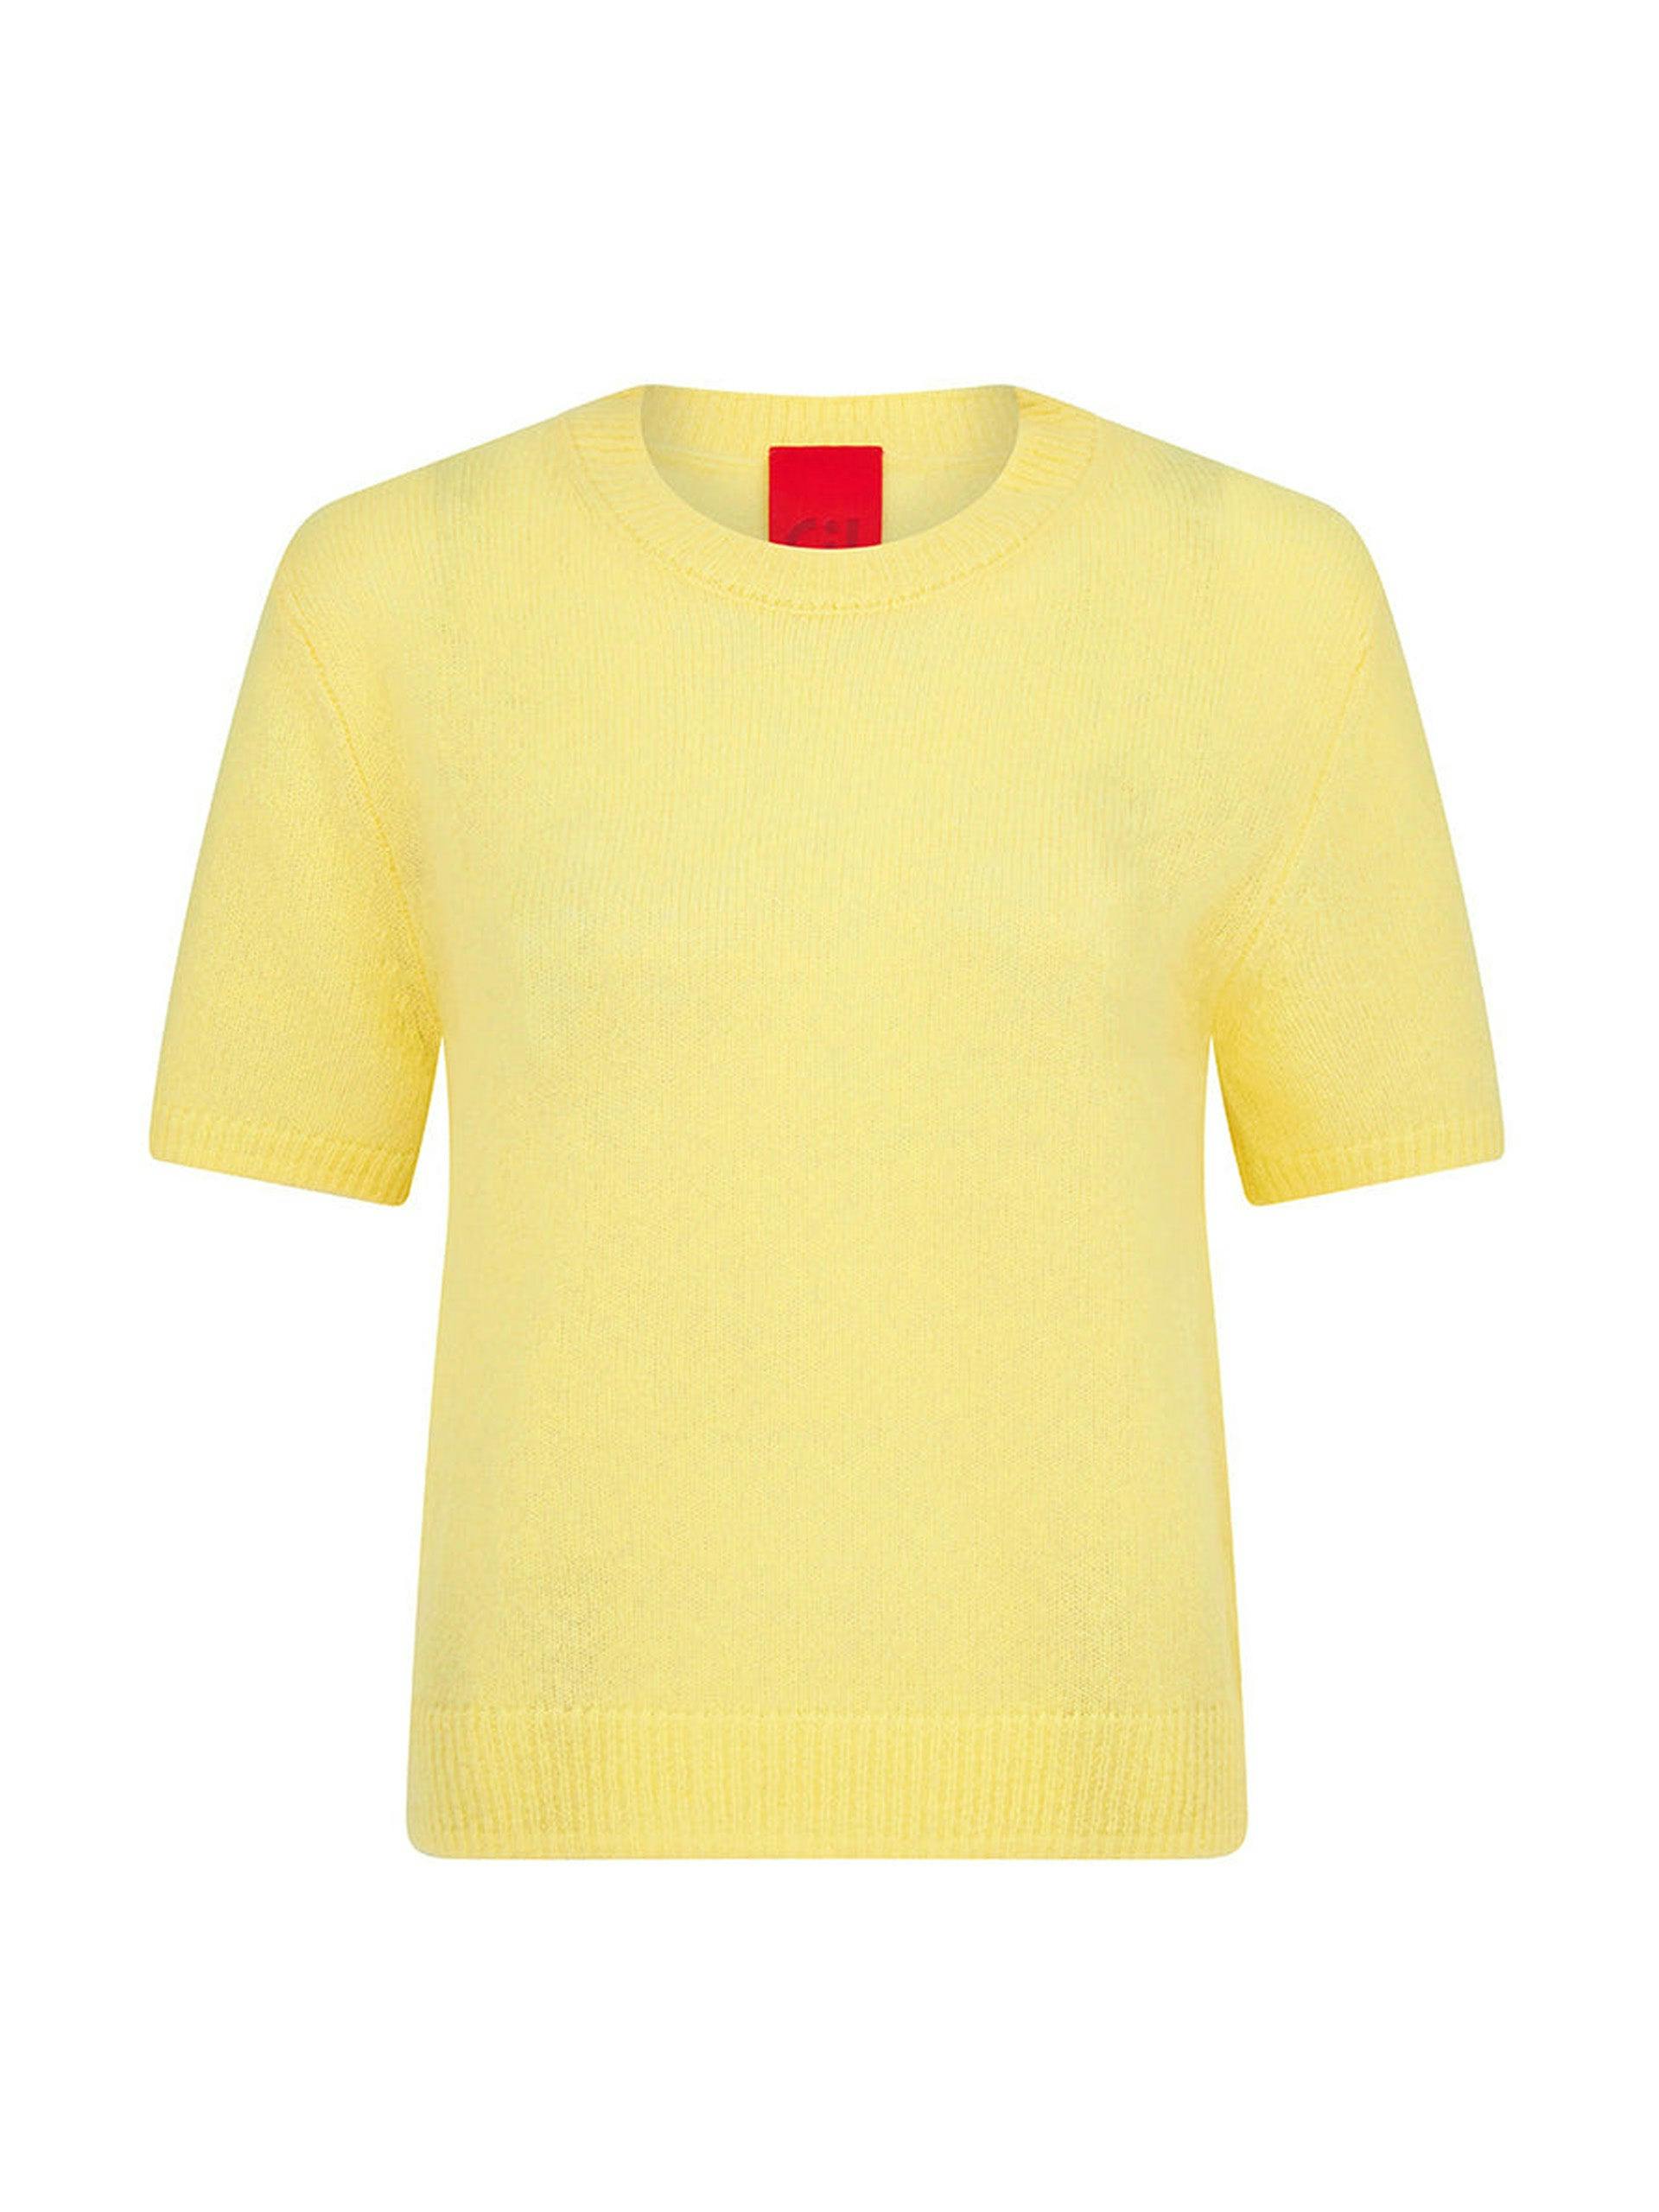 Yellow fine-knit cashmere t-shirt